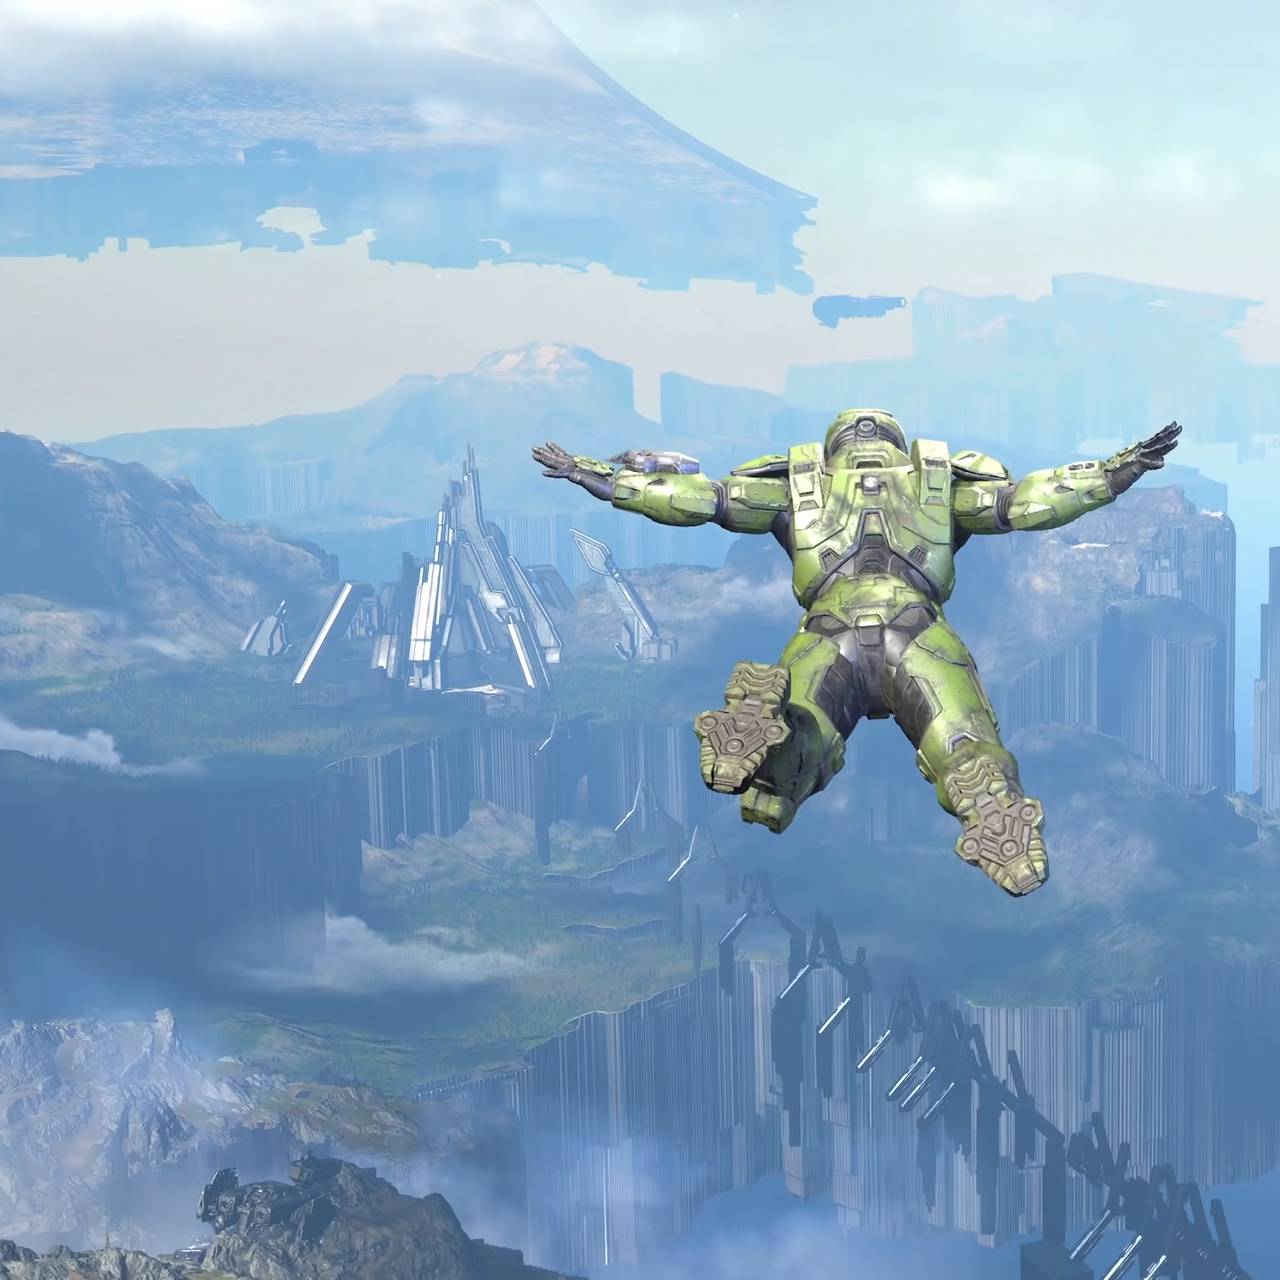 Spillfiguren Master Chief svever i lufta i spillet «Halo Infinite»